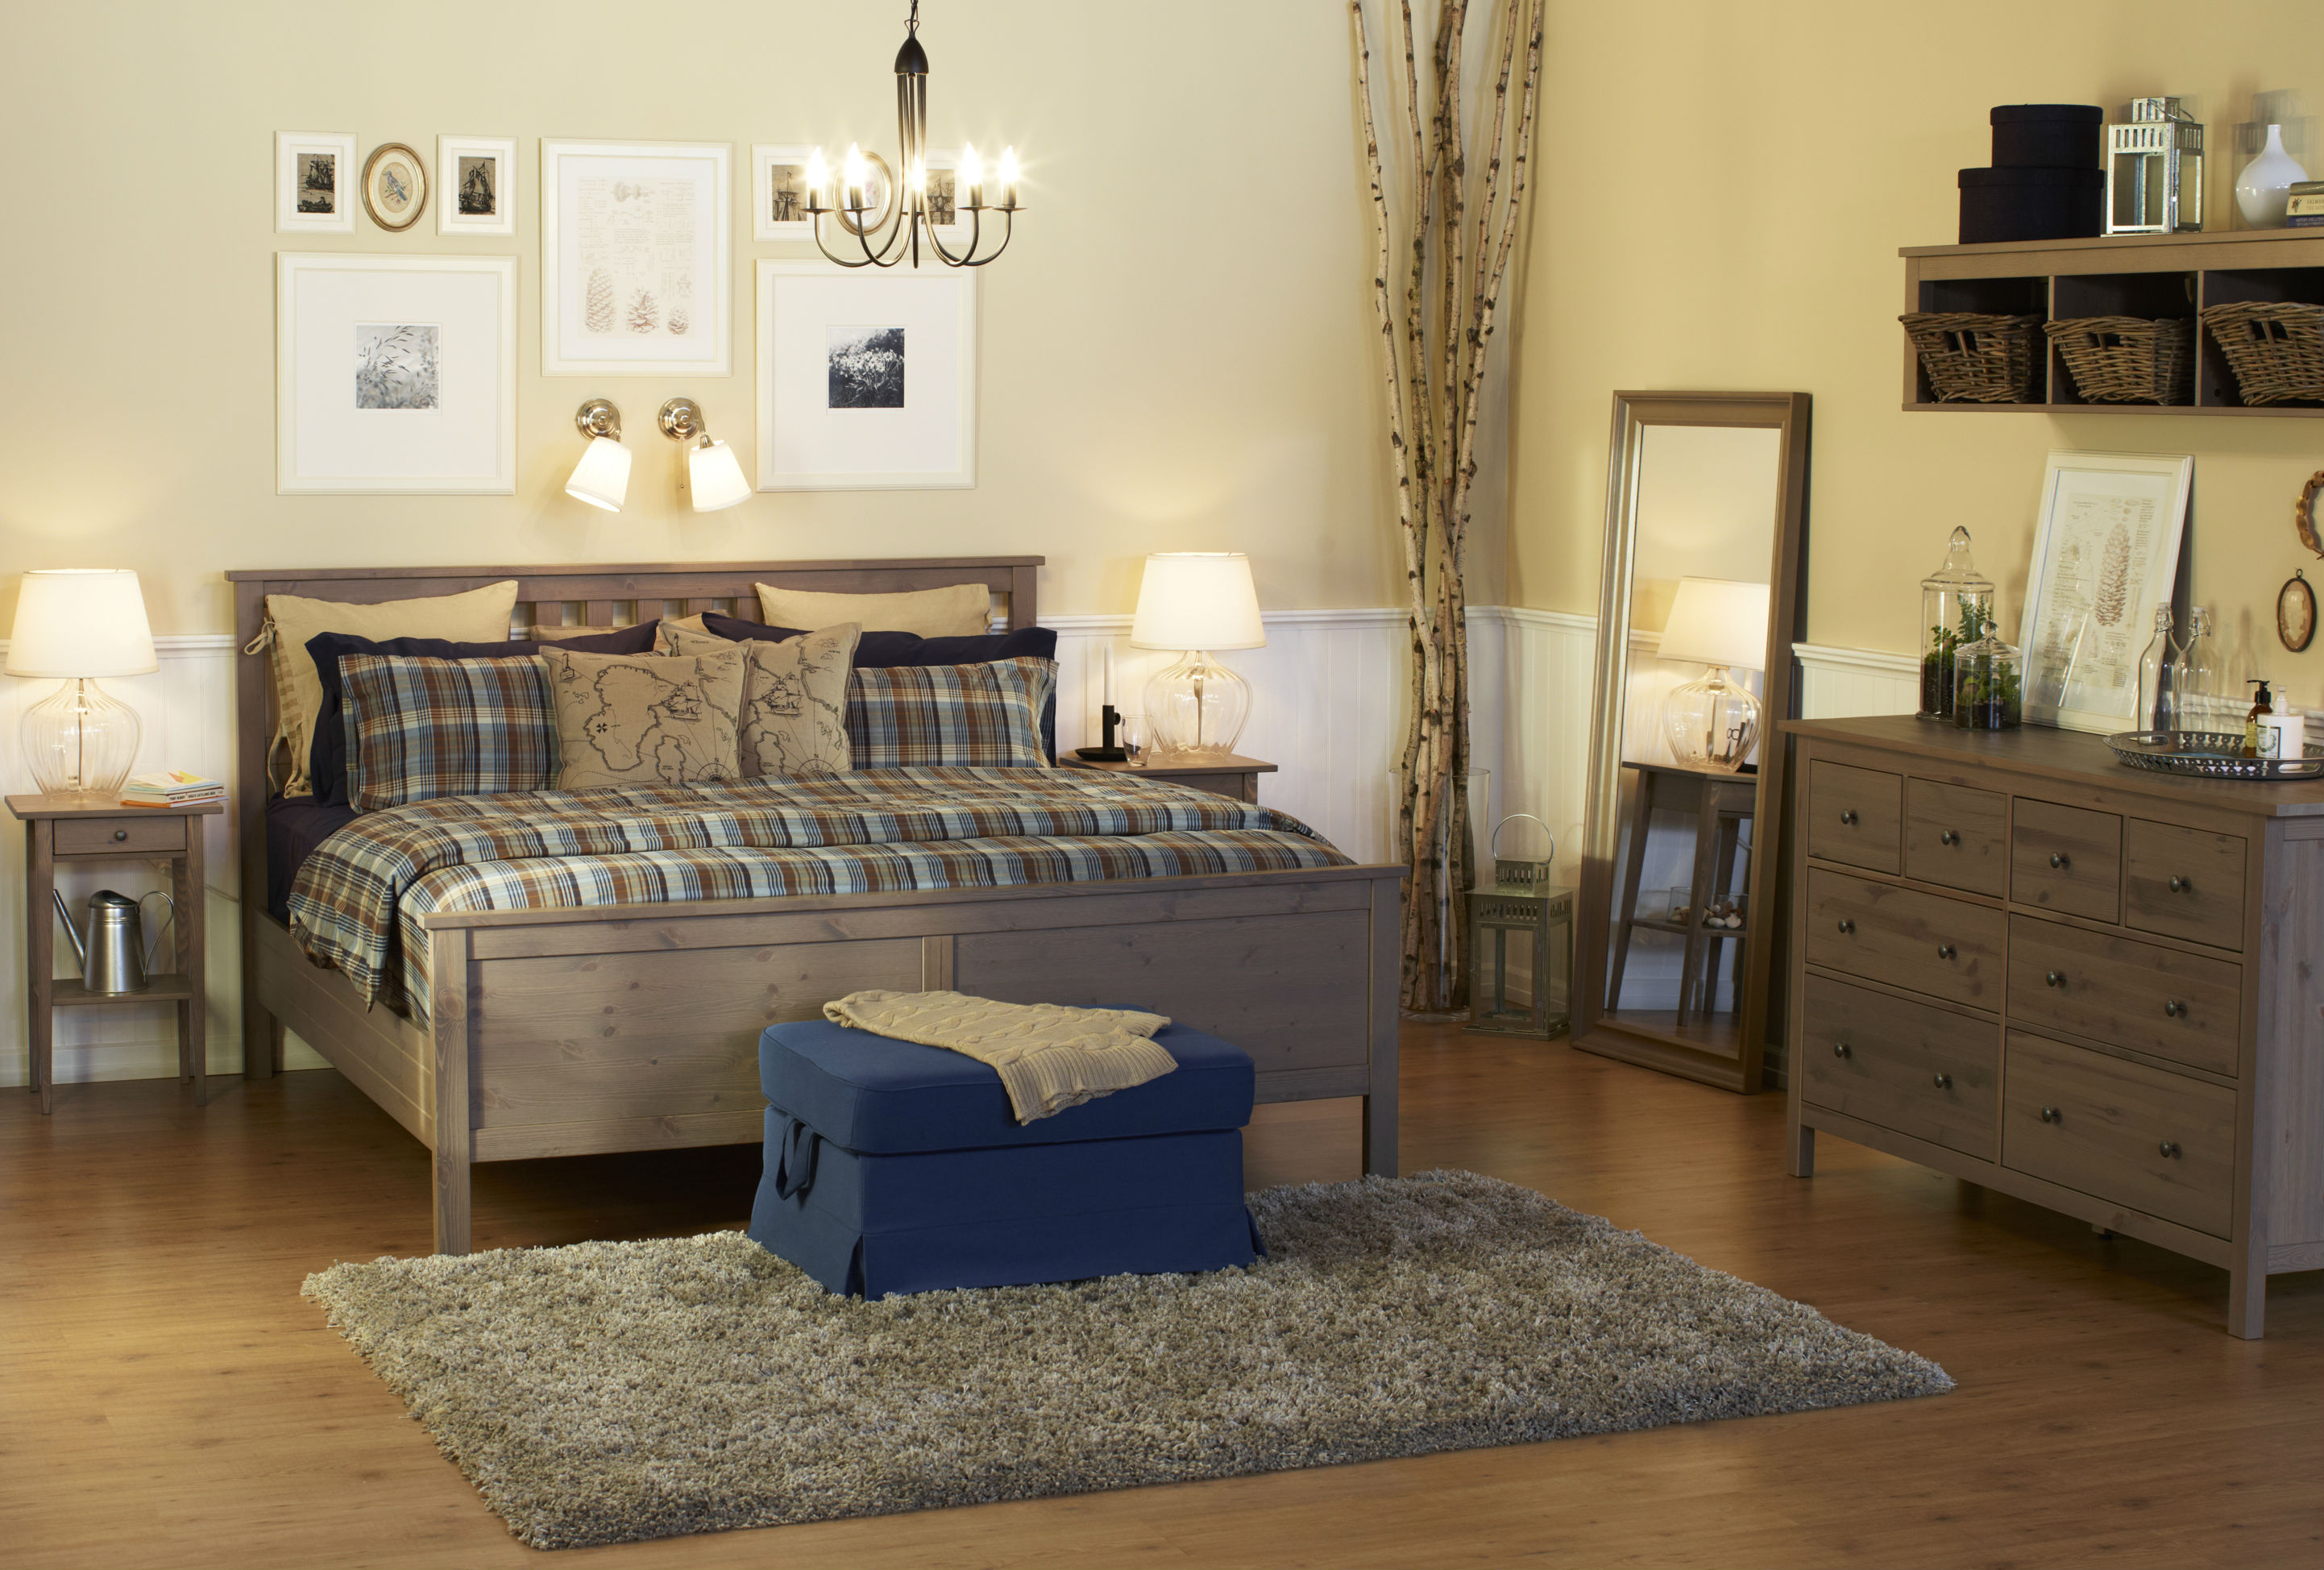 ikea basic bedroom furniture